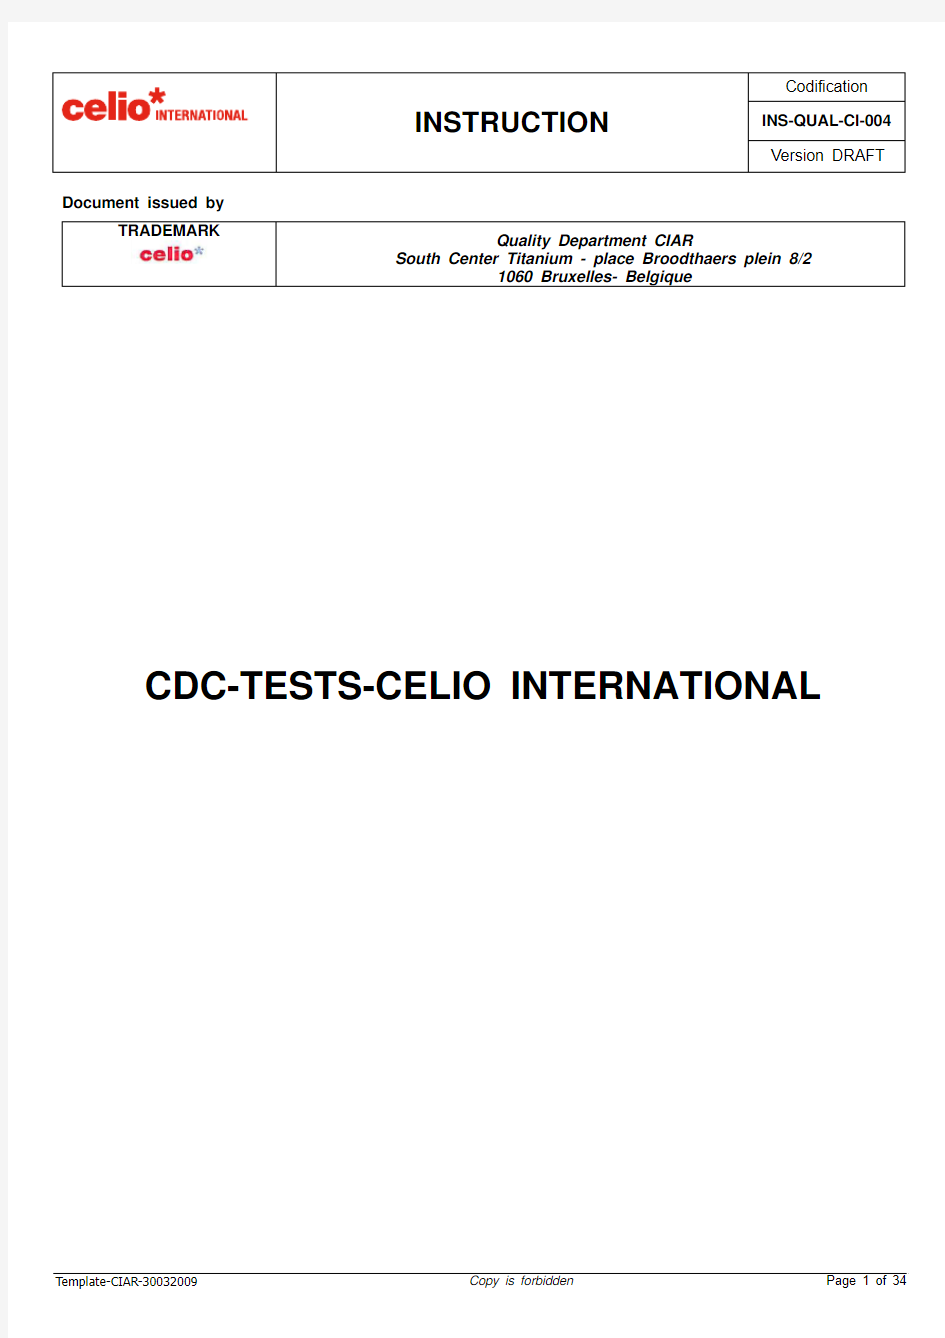 INS-QUAL-CI-004-A-CDC-TESTS-CELIO INTERNATIONAL DRAFT 23062010